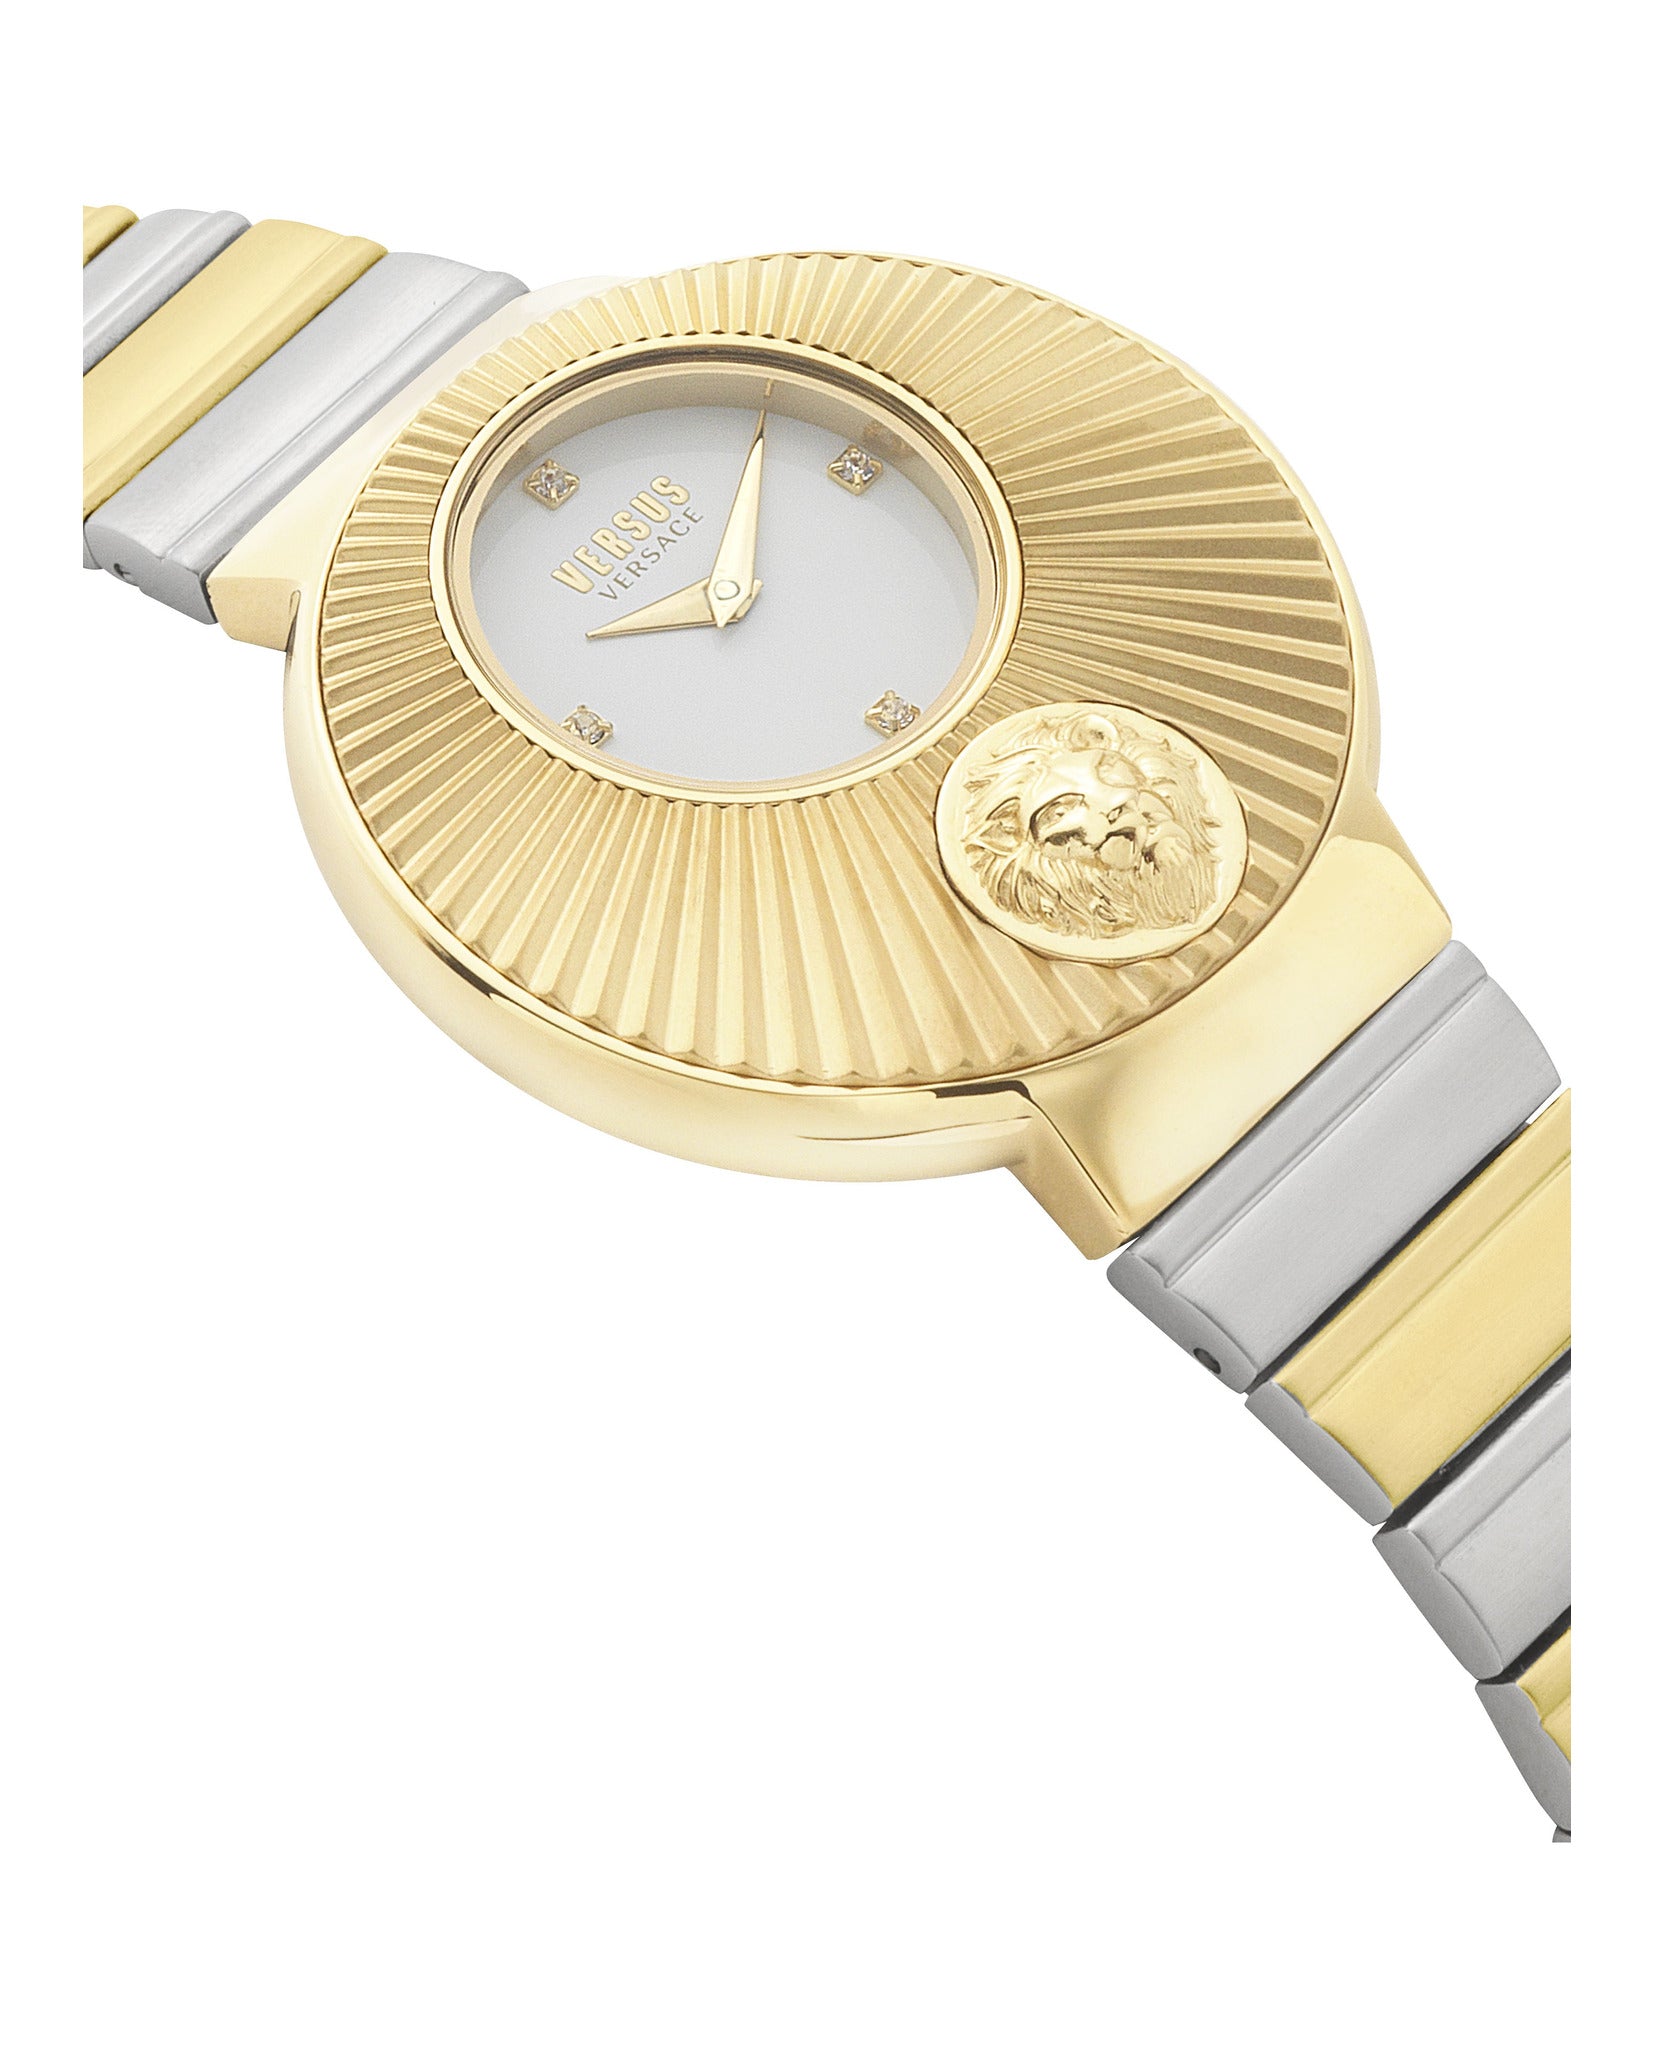 Sempione Bracelet watch